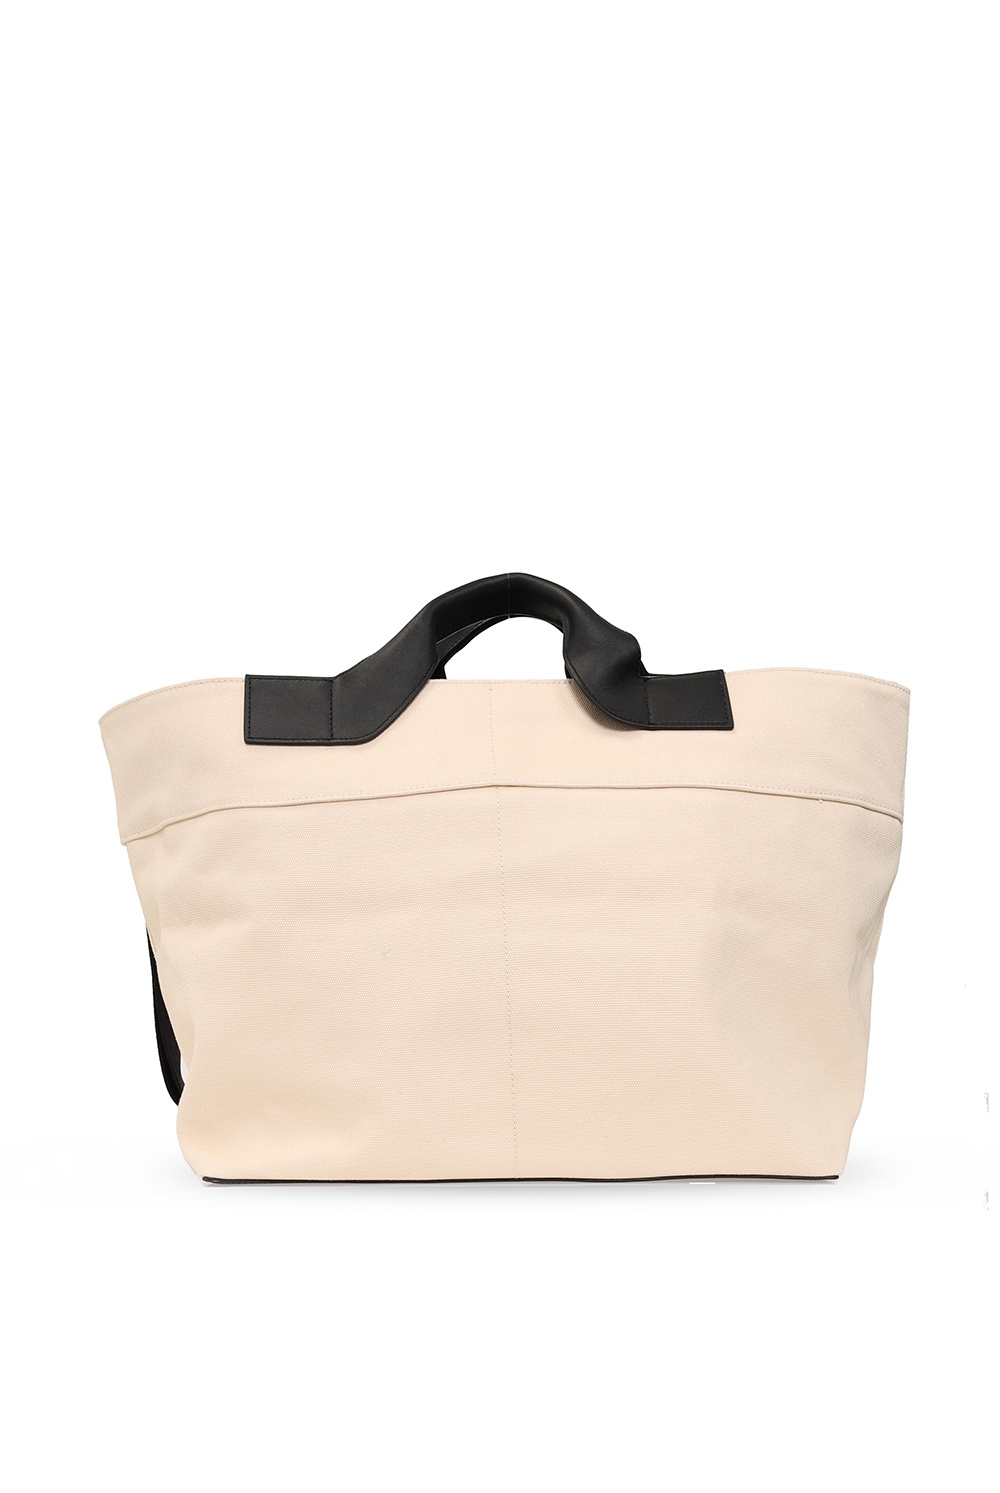 ISO: A brown monogram bag similar to the LV Loop bag, any